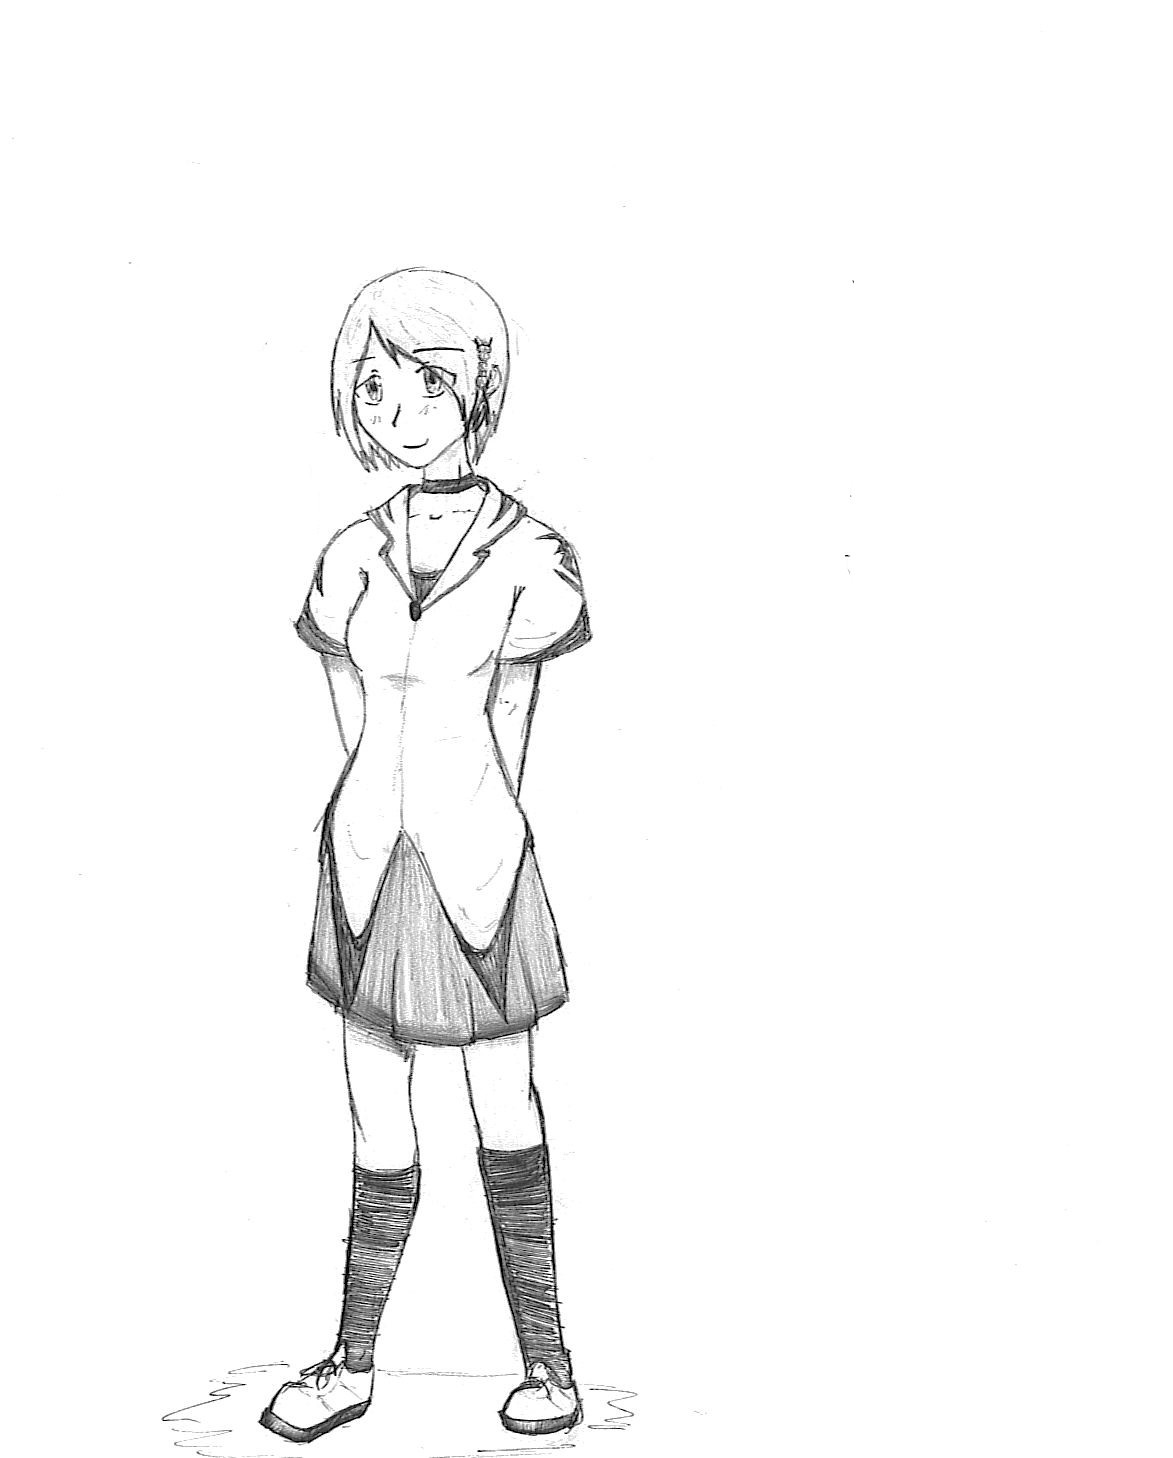 Rai has a uniform finally by Kitsune_Girl